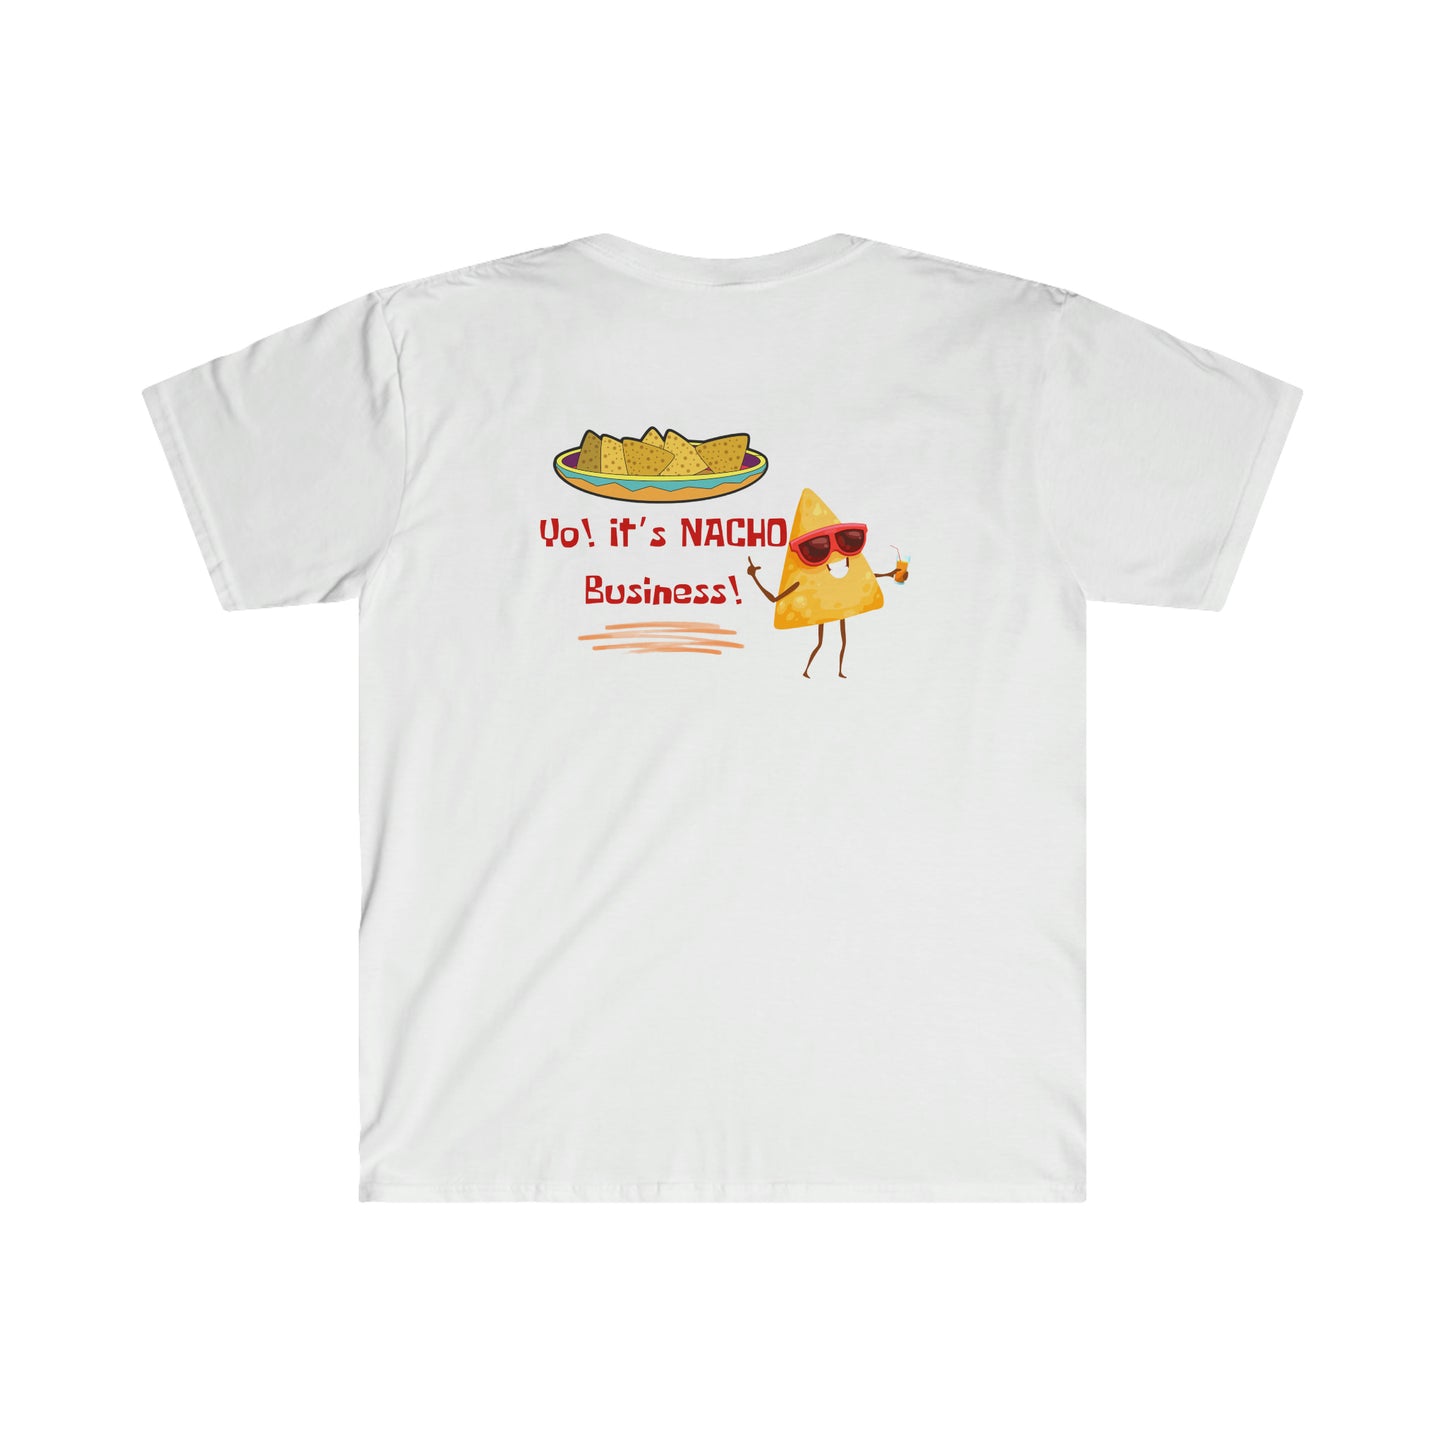 ‘Yo! It’s NACHO Business!’ Printed Front & Back. Unisex Softstyle T-Shirt